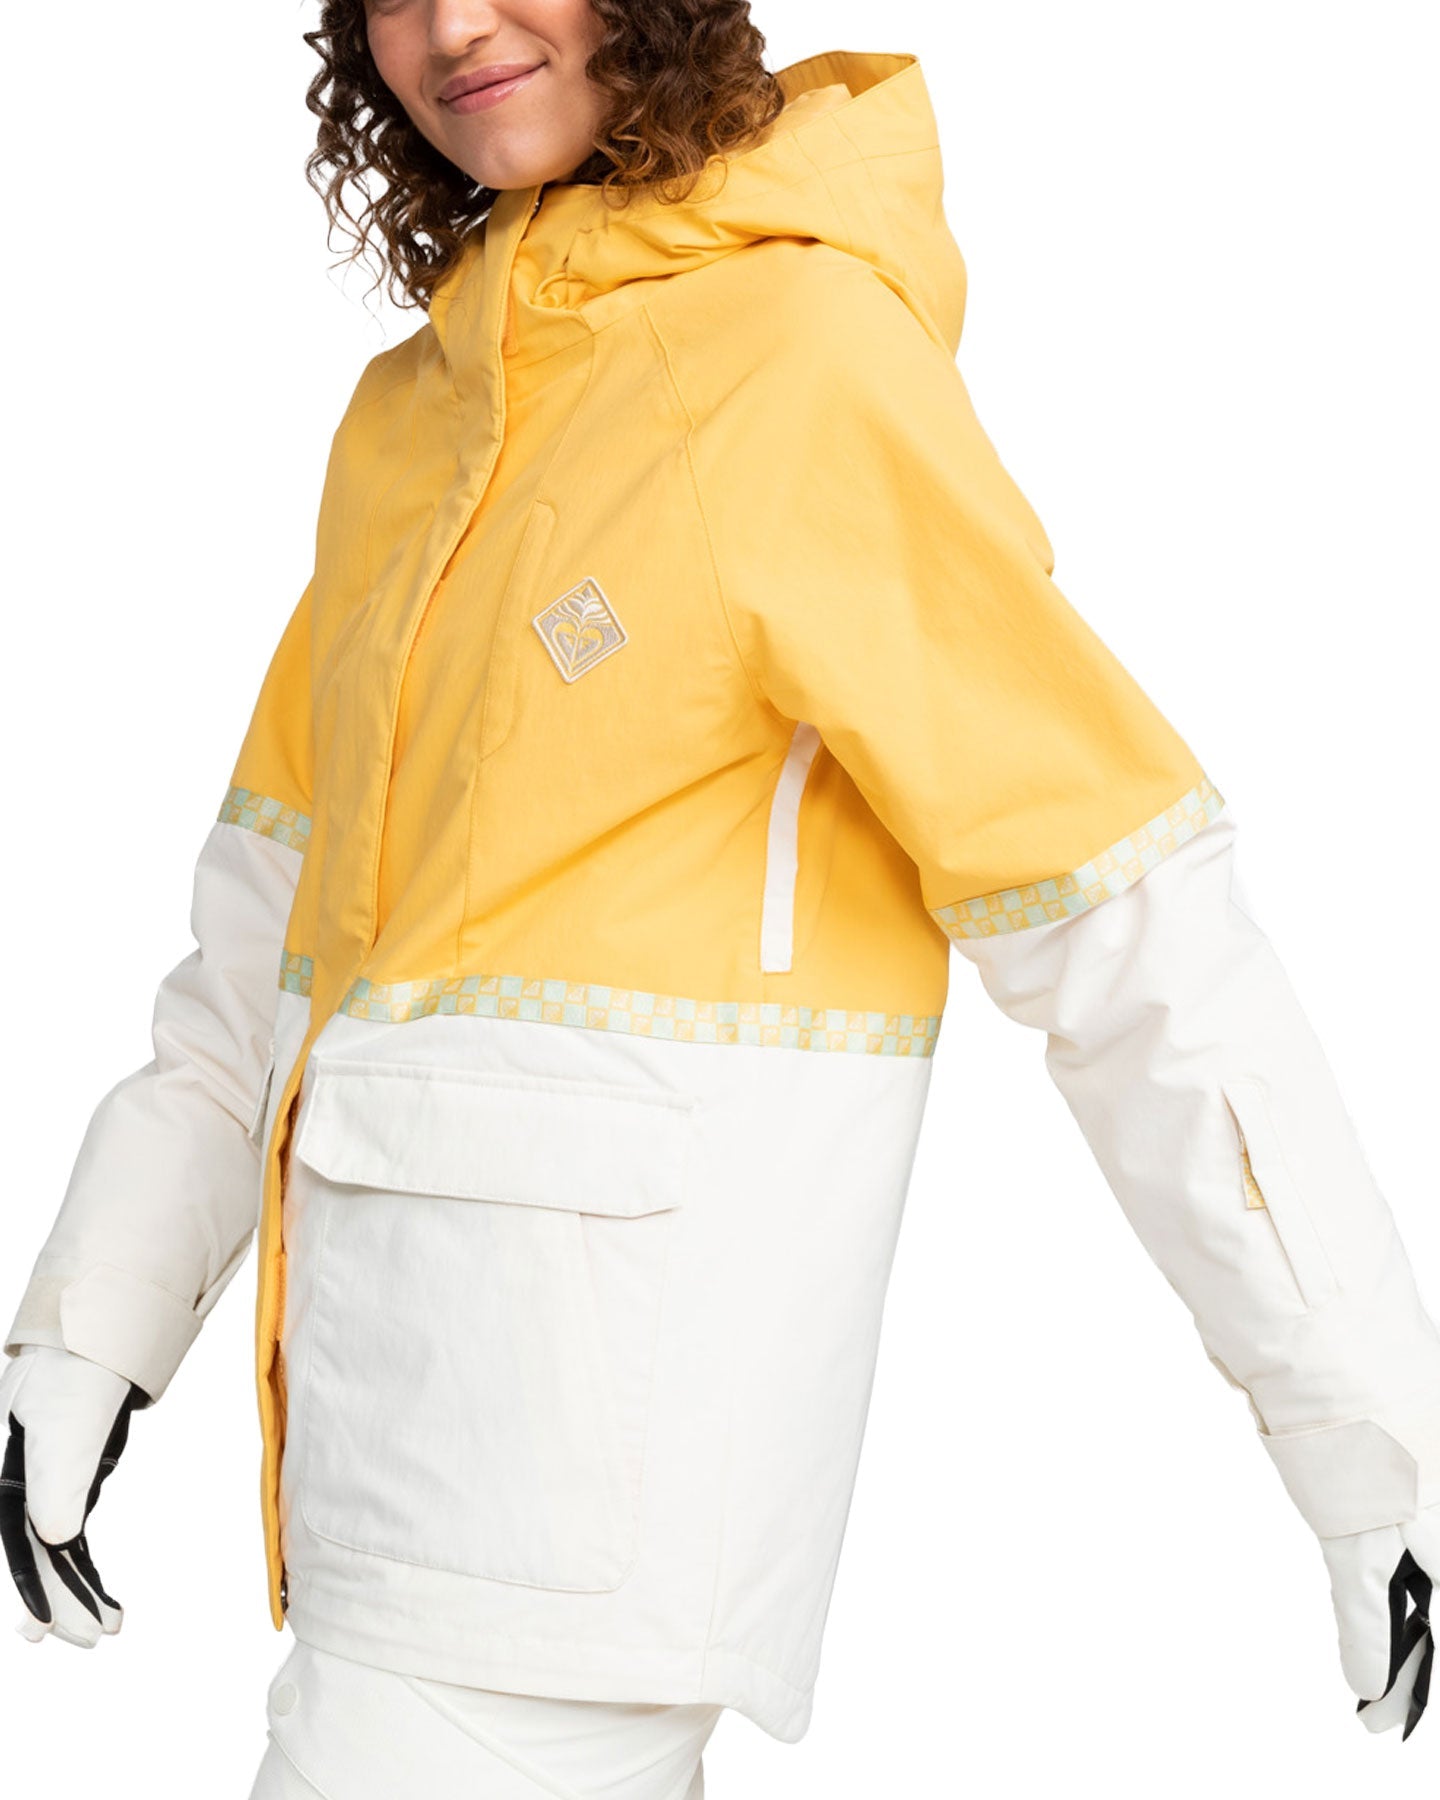 Roxy Women's Ritual Snow Jacket with DryFlight Technology True